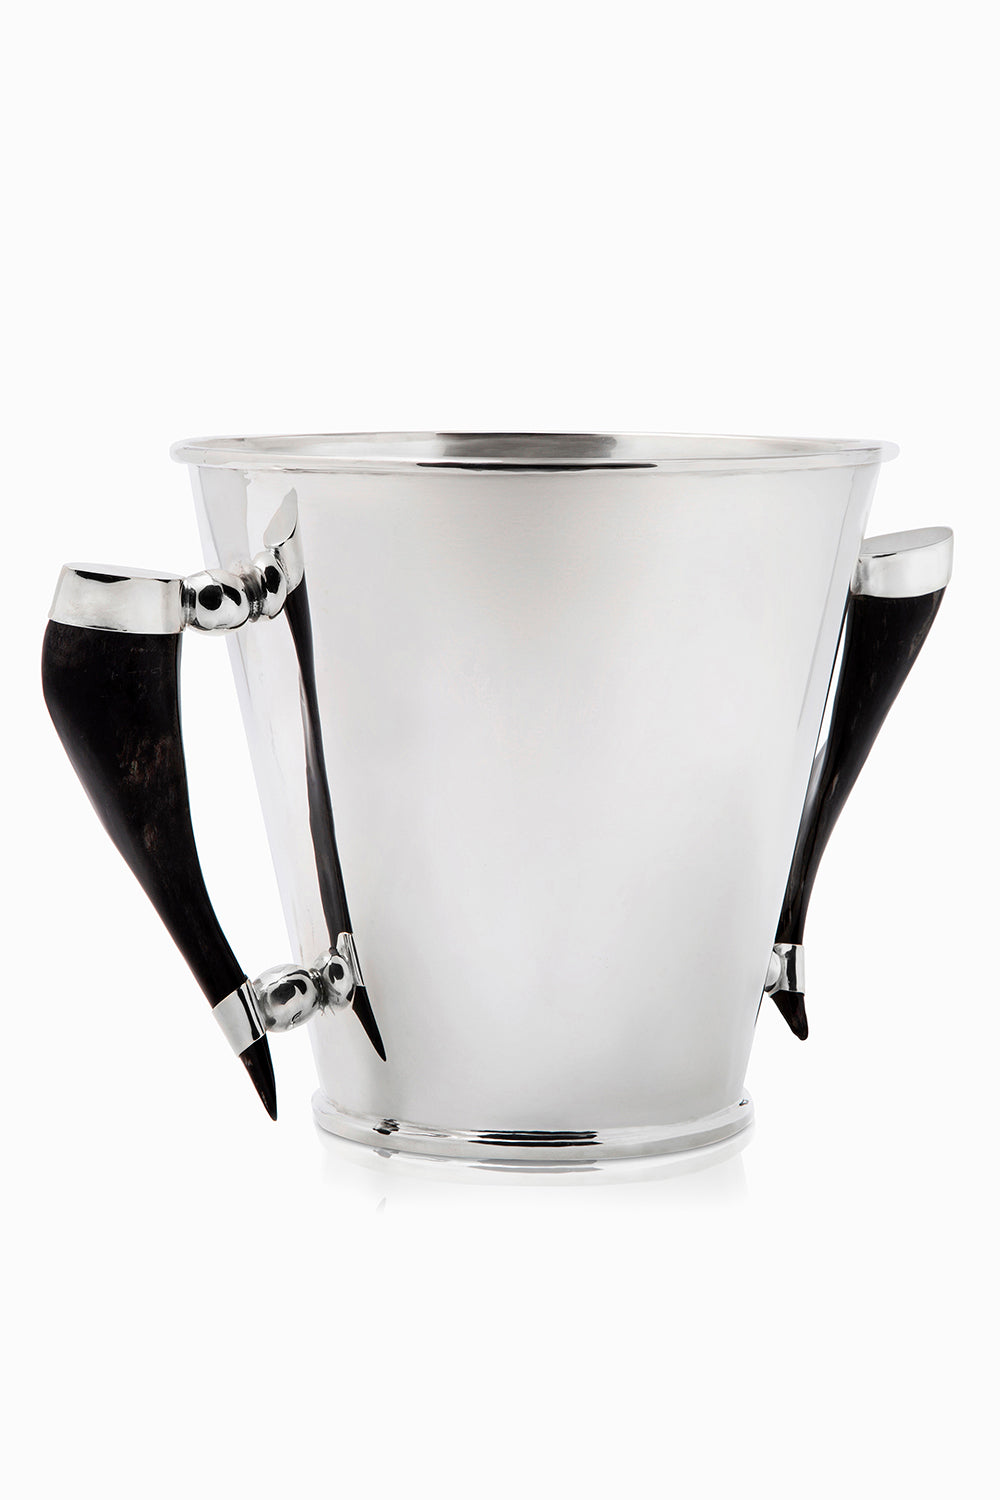 Palpala Round Champagne Bucket, Black Horn, Polished Silver